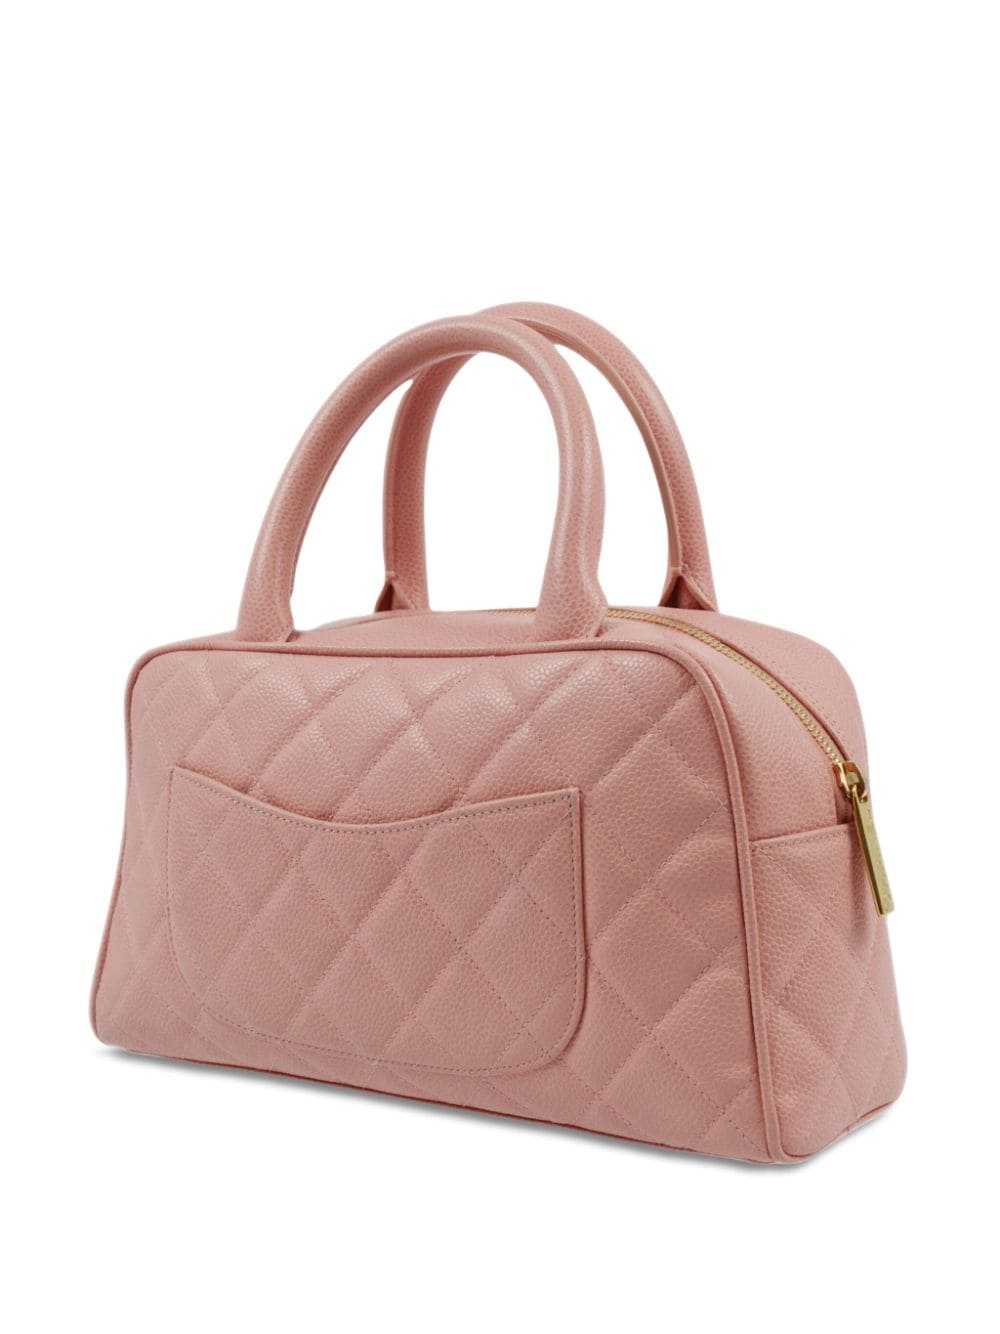 CHANEL Pre-Owned 2003 CC Timeless handbag - Pink - image 2